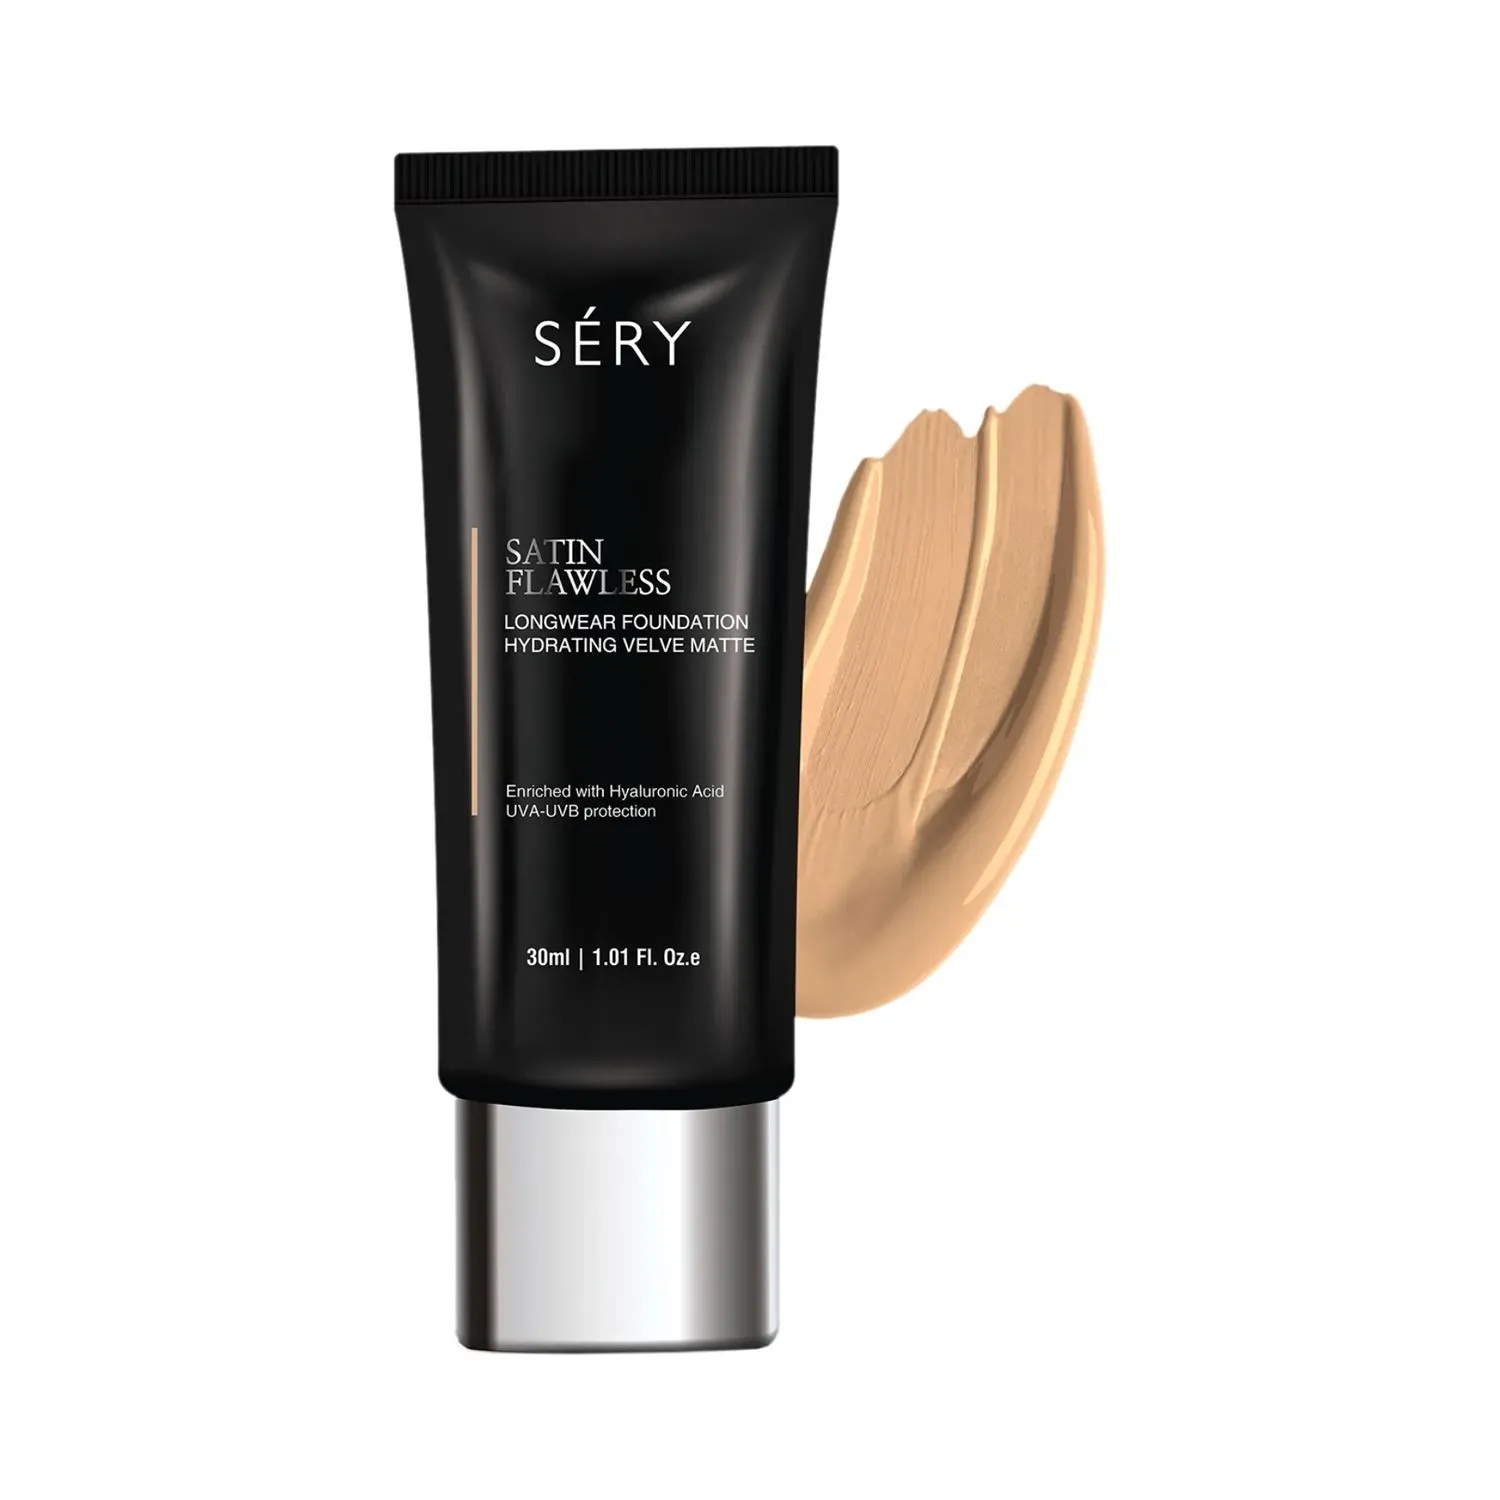 Sery Satin Flawless Longwear Foundation - Ivory (30ml)